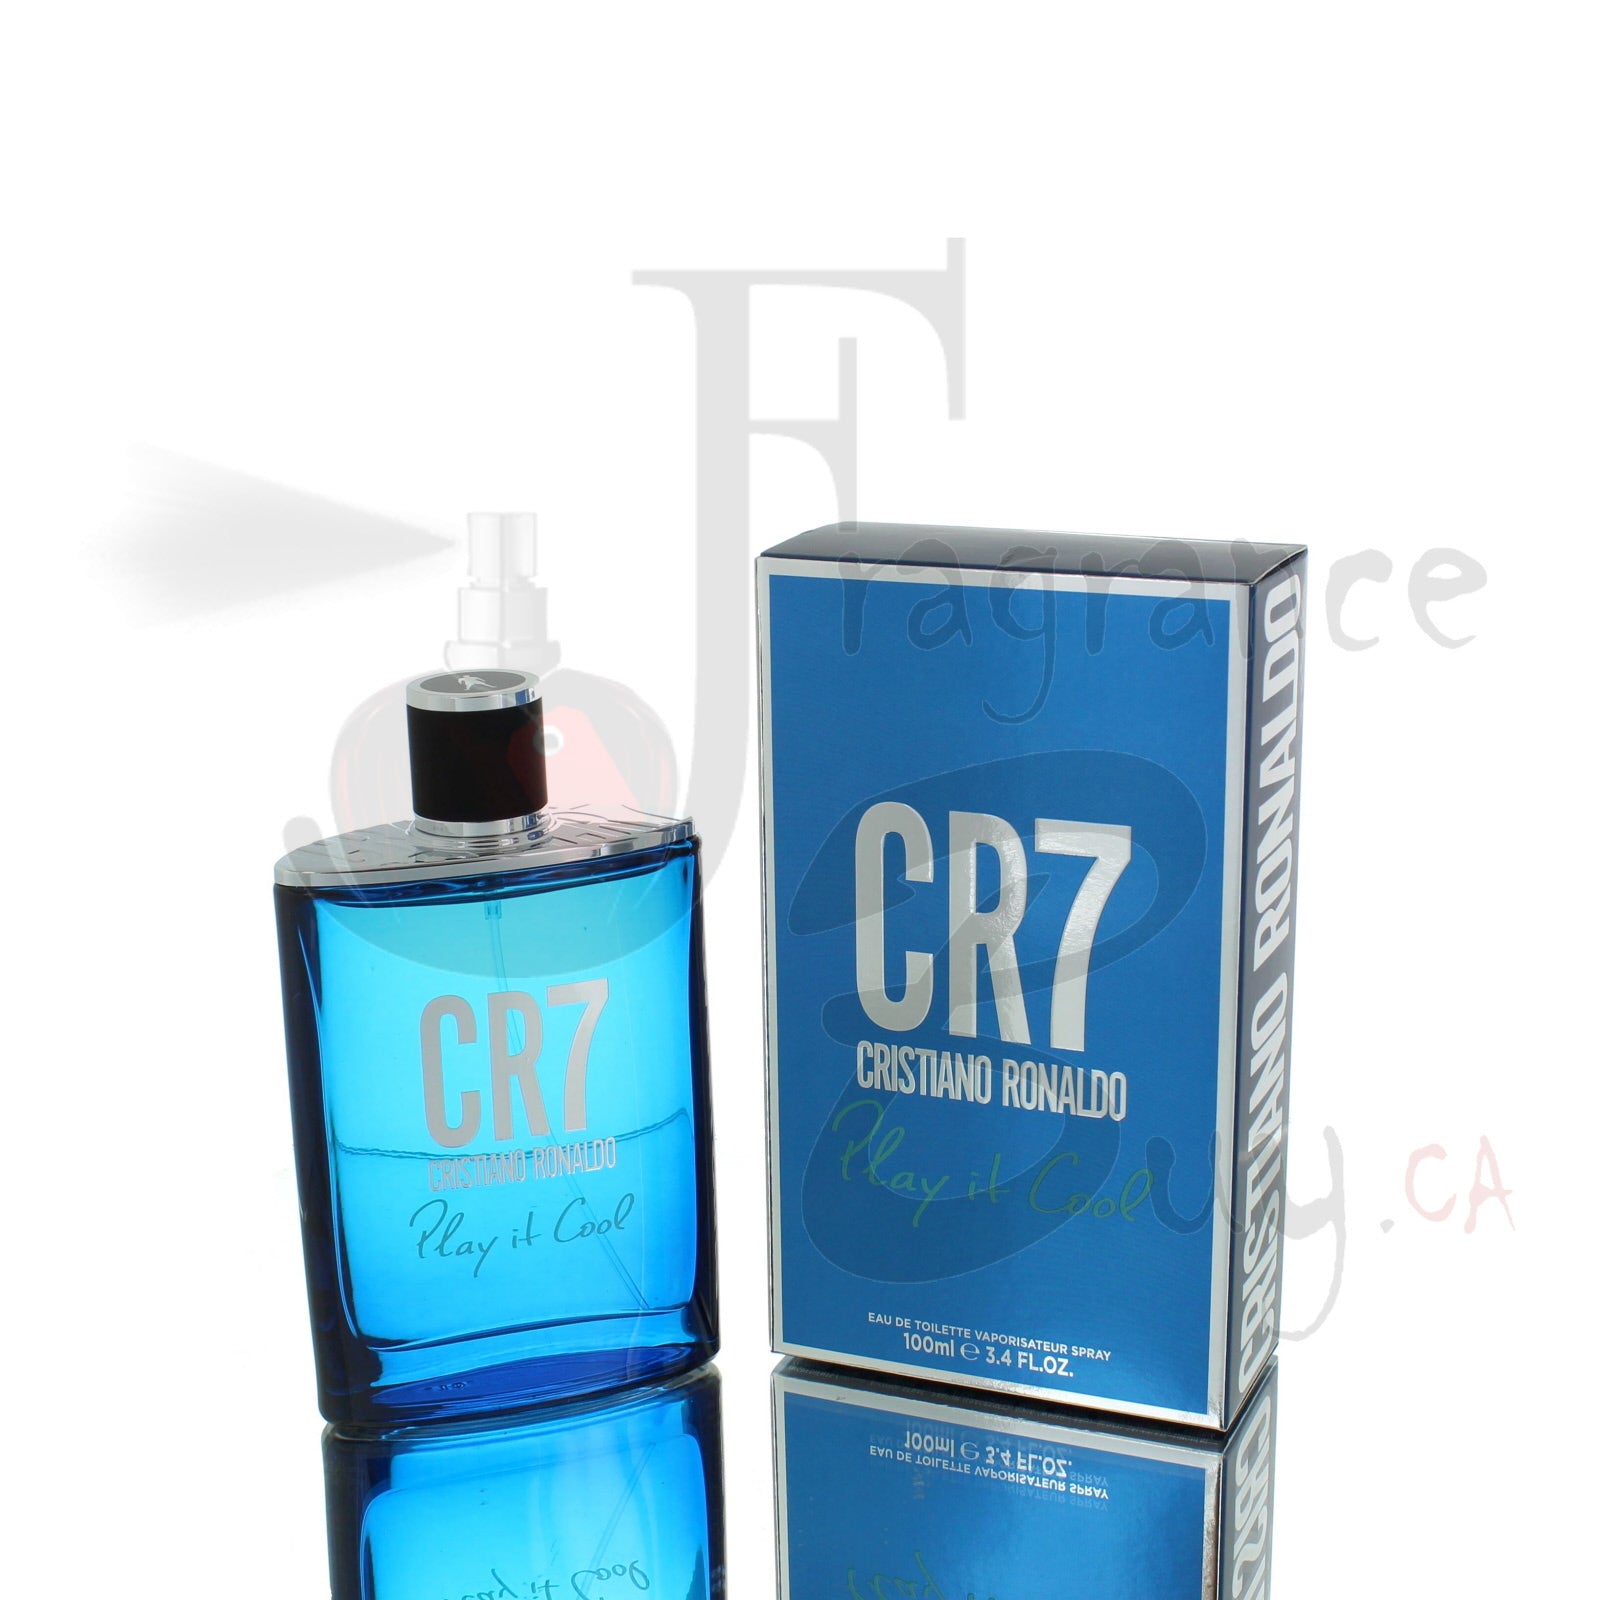 cr7 perfume play it cool